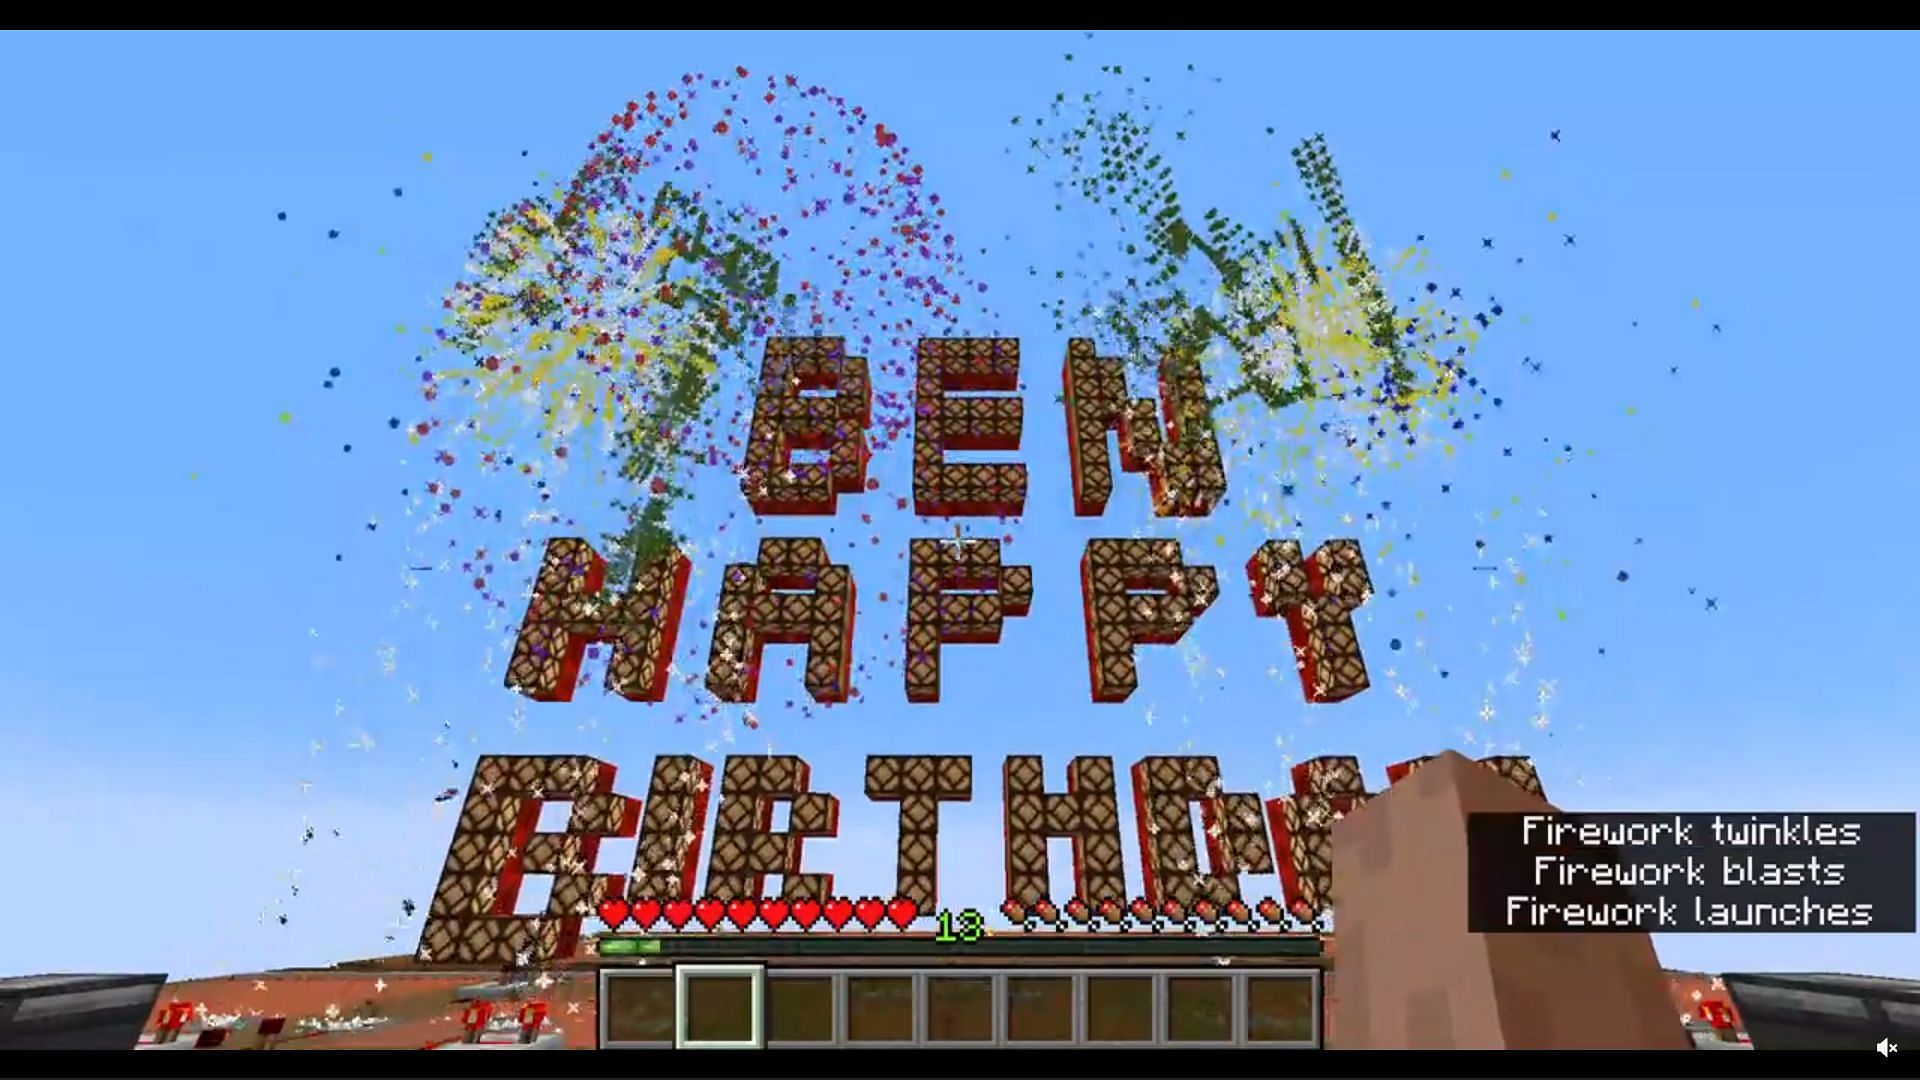 Wholesome Minecraft Redditor wishes happy birthday to son using Redstone